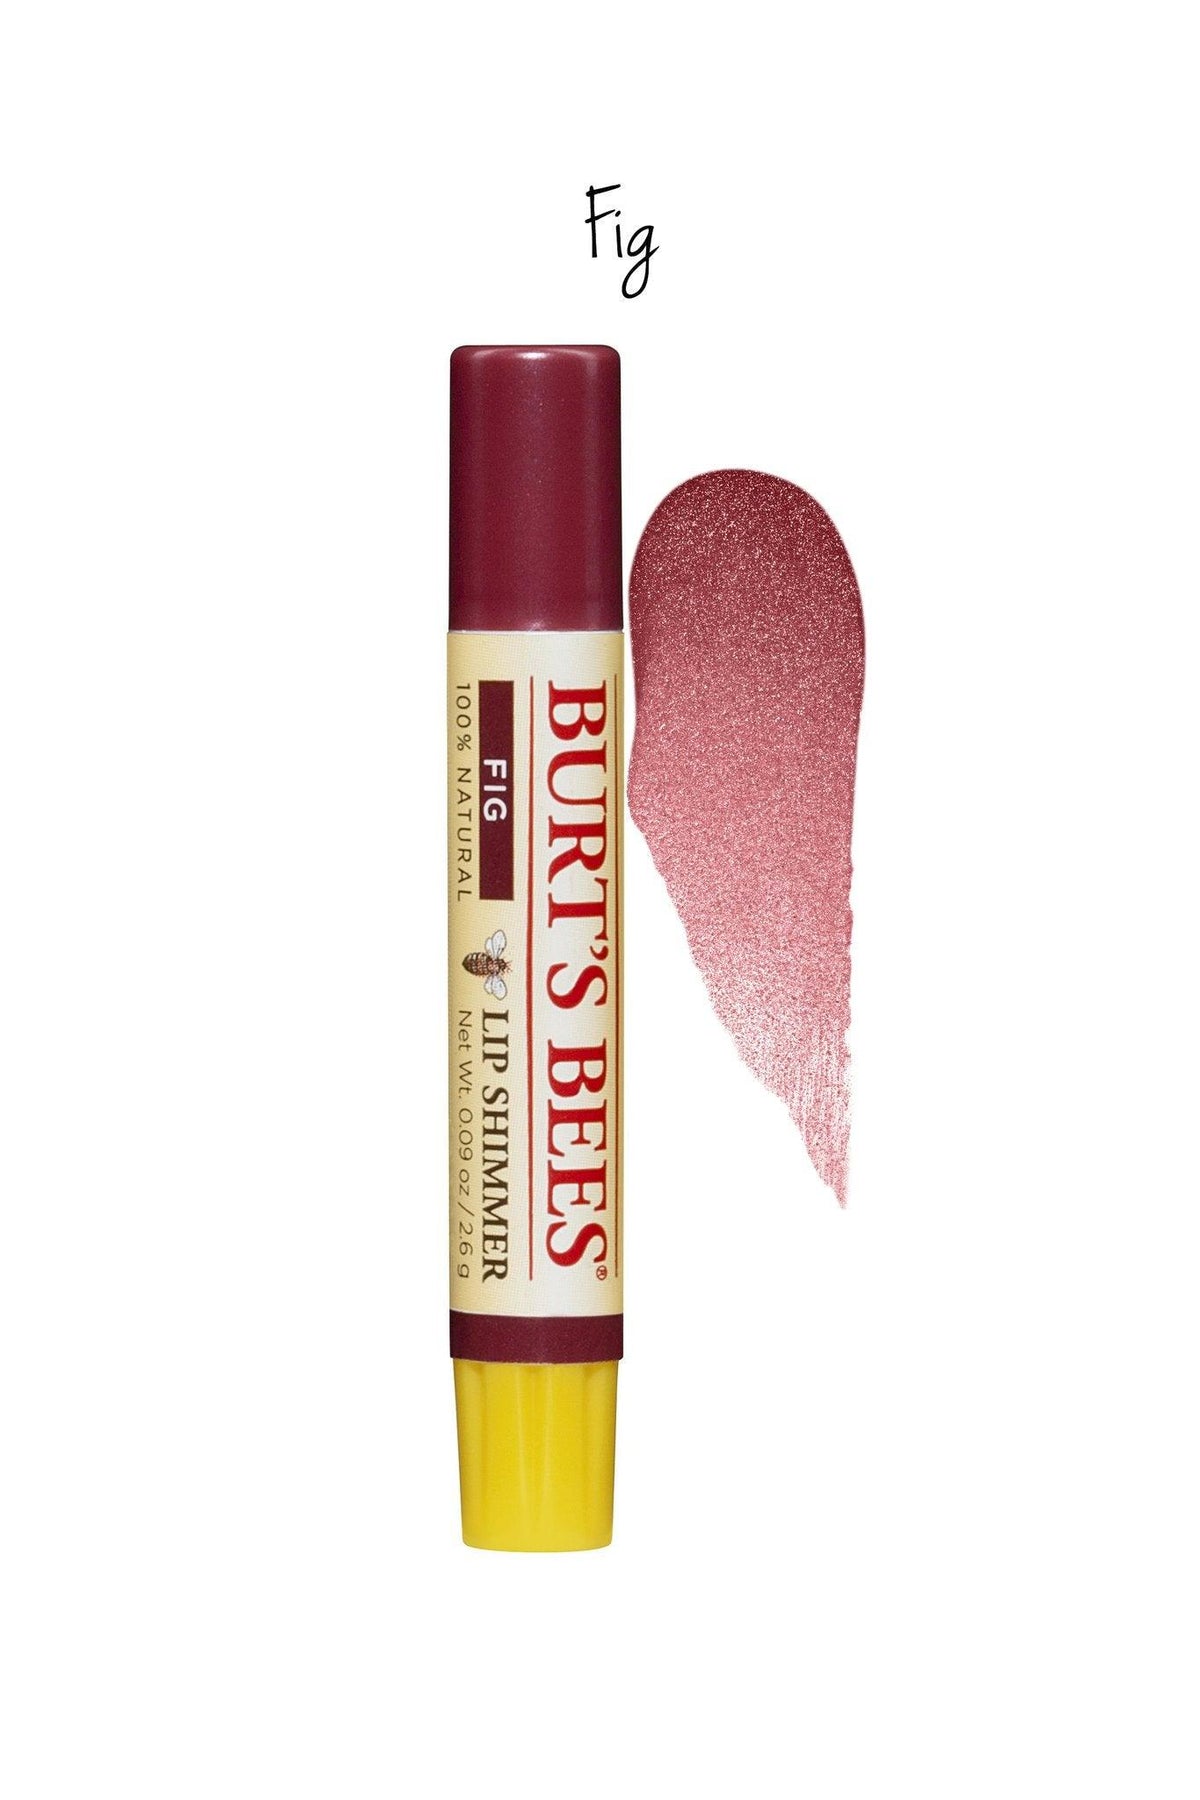 Burt's Bees Lip Shimmer Fig 2.6g Lip Balm at Village Vitamin Store